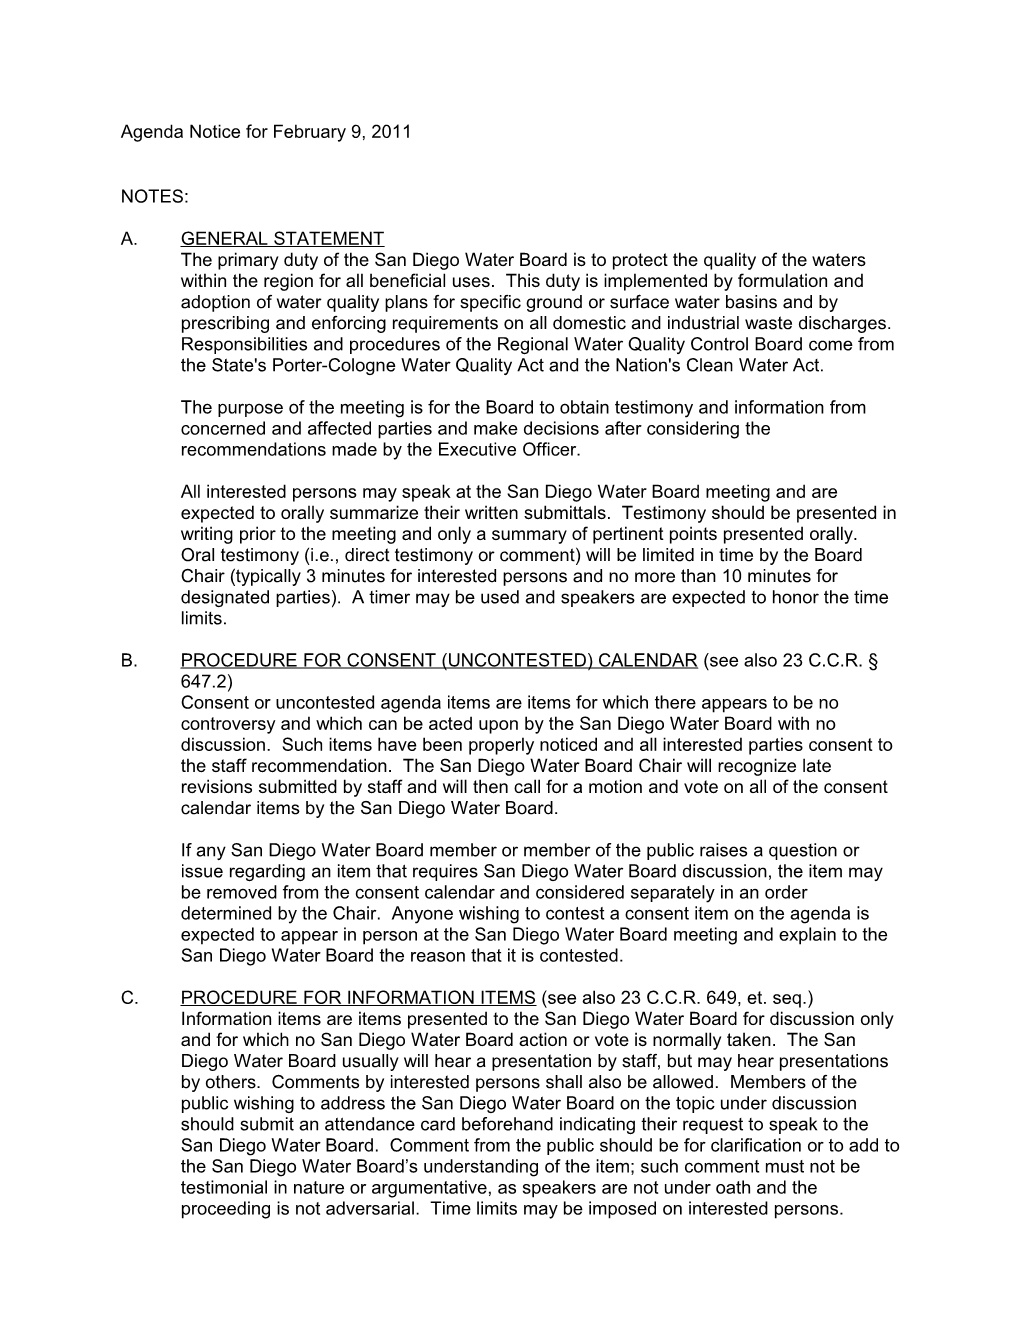 Agenda Notice Forfebruary 9, 2011